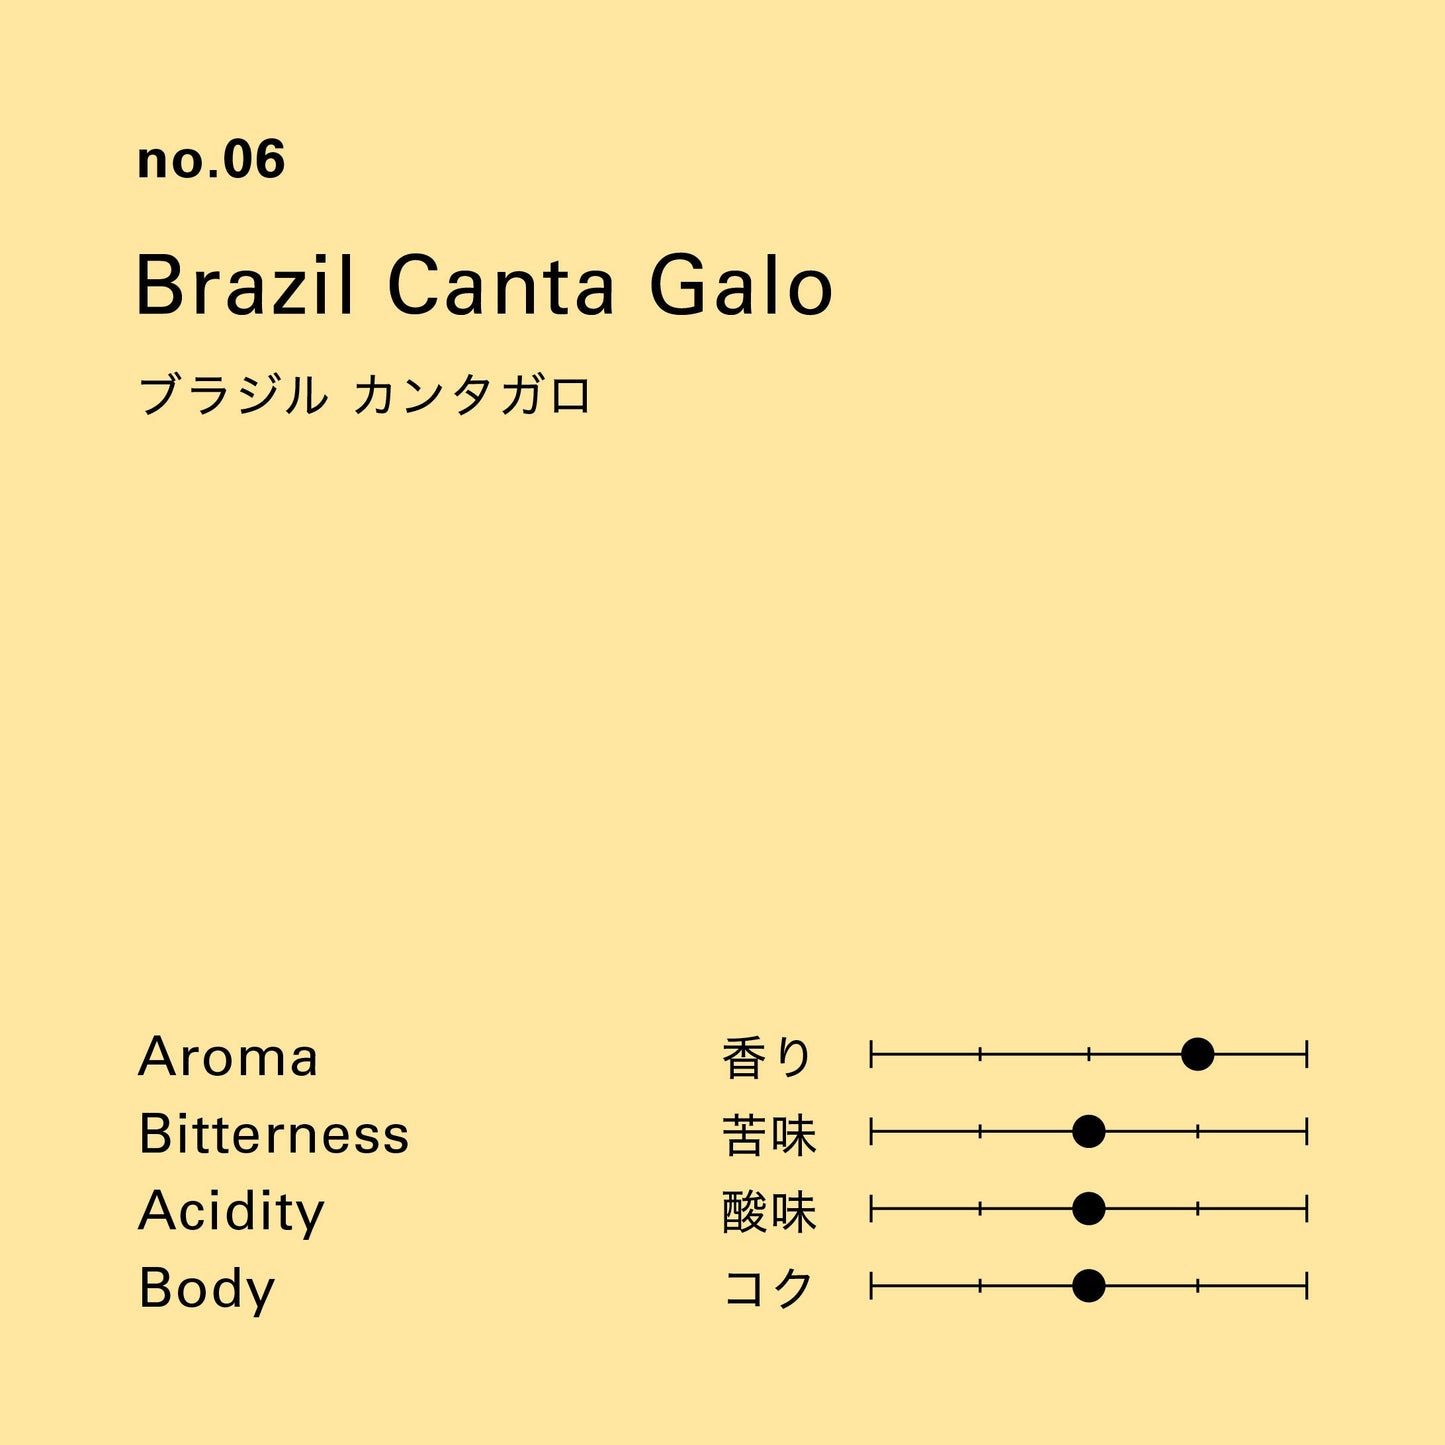 no.06 ブラジル カンタガロ 100g